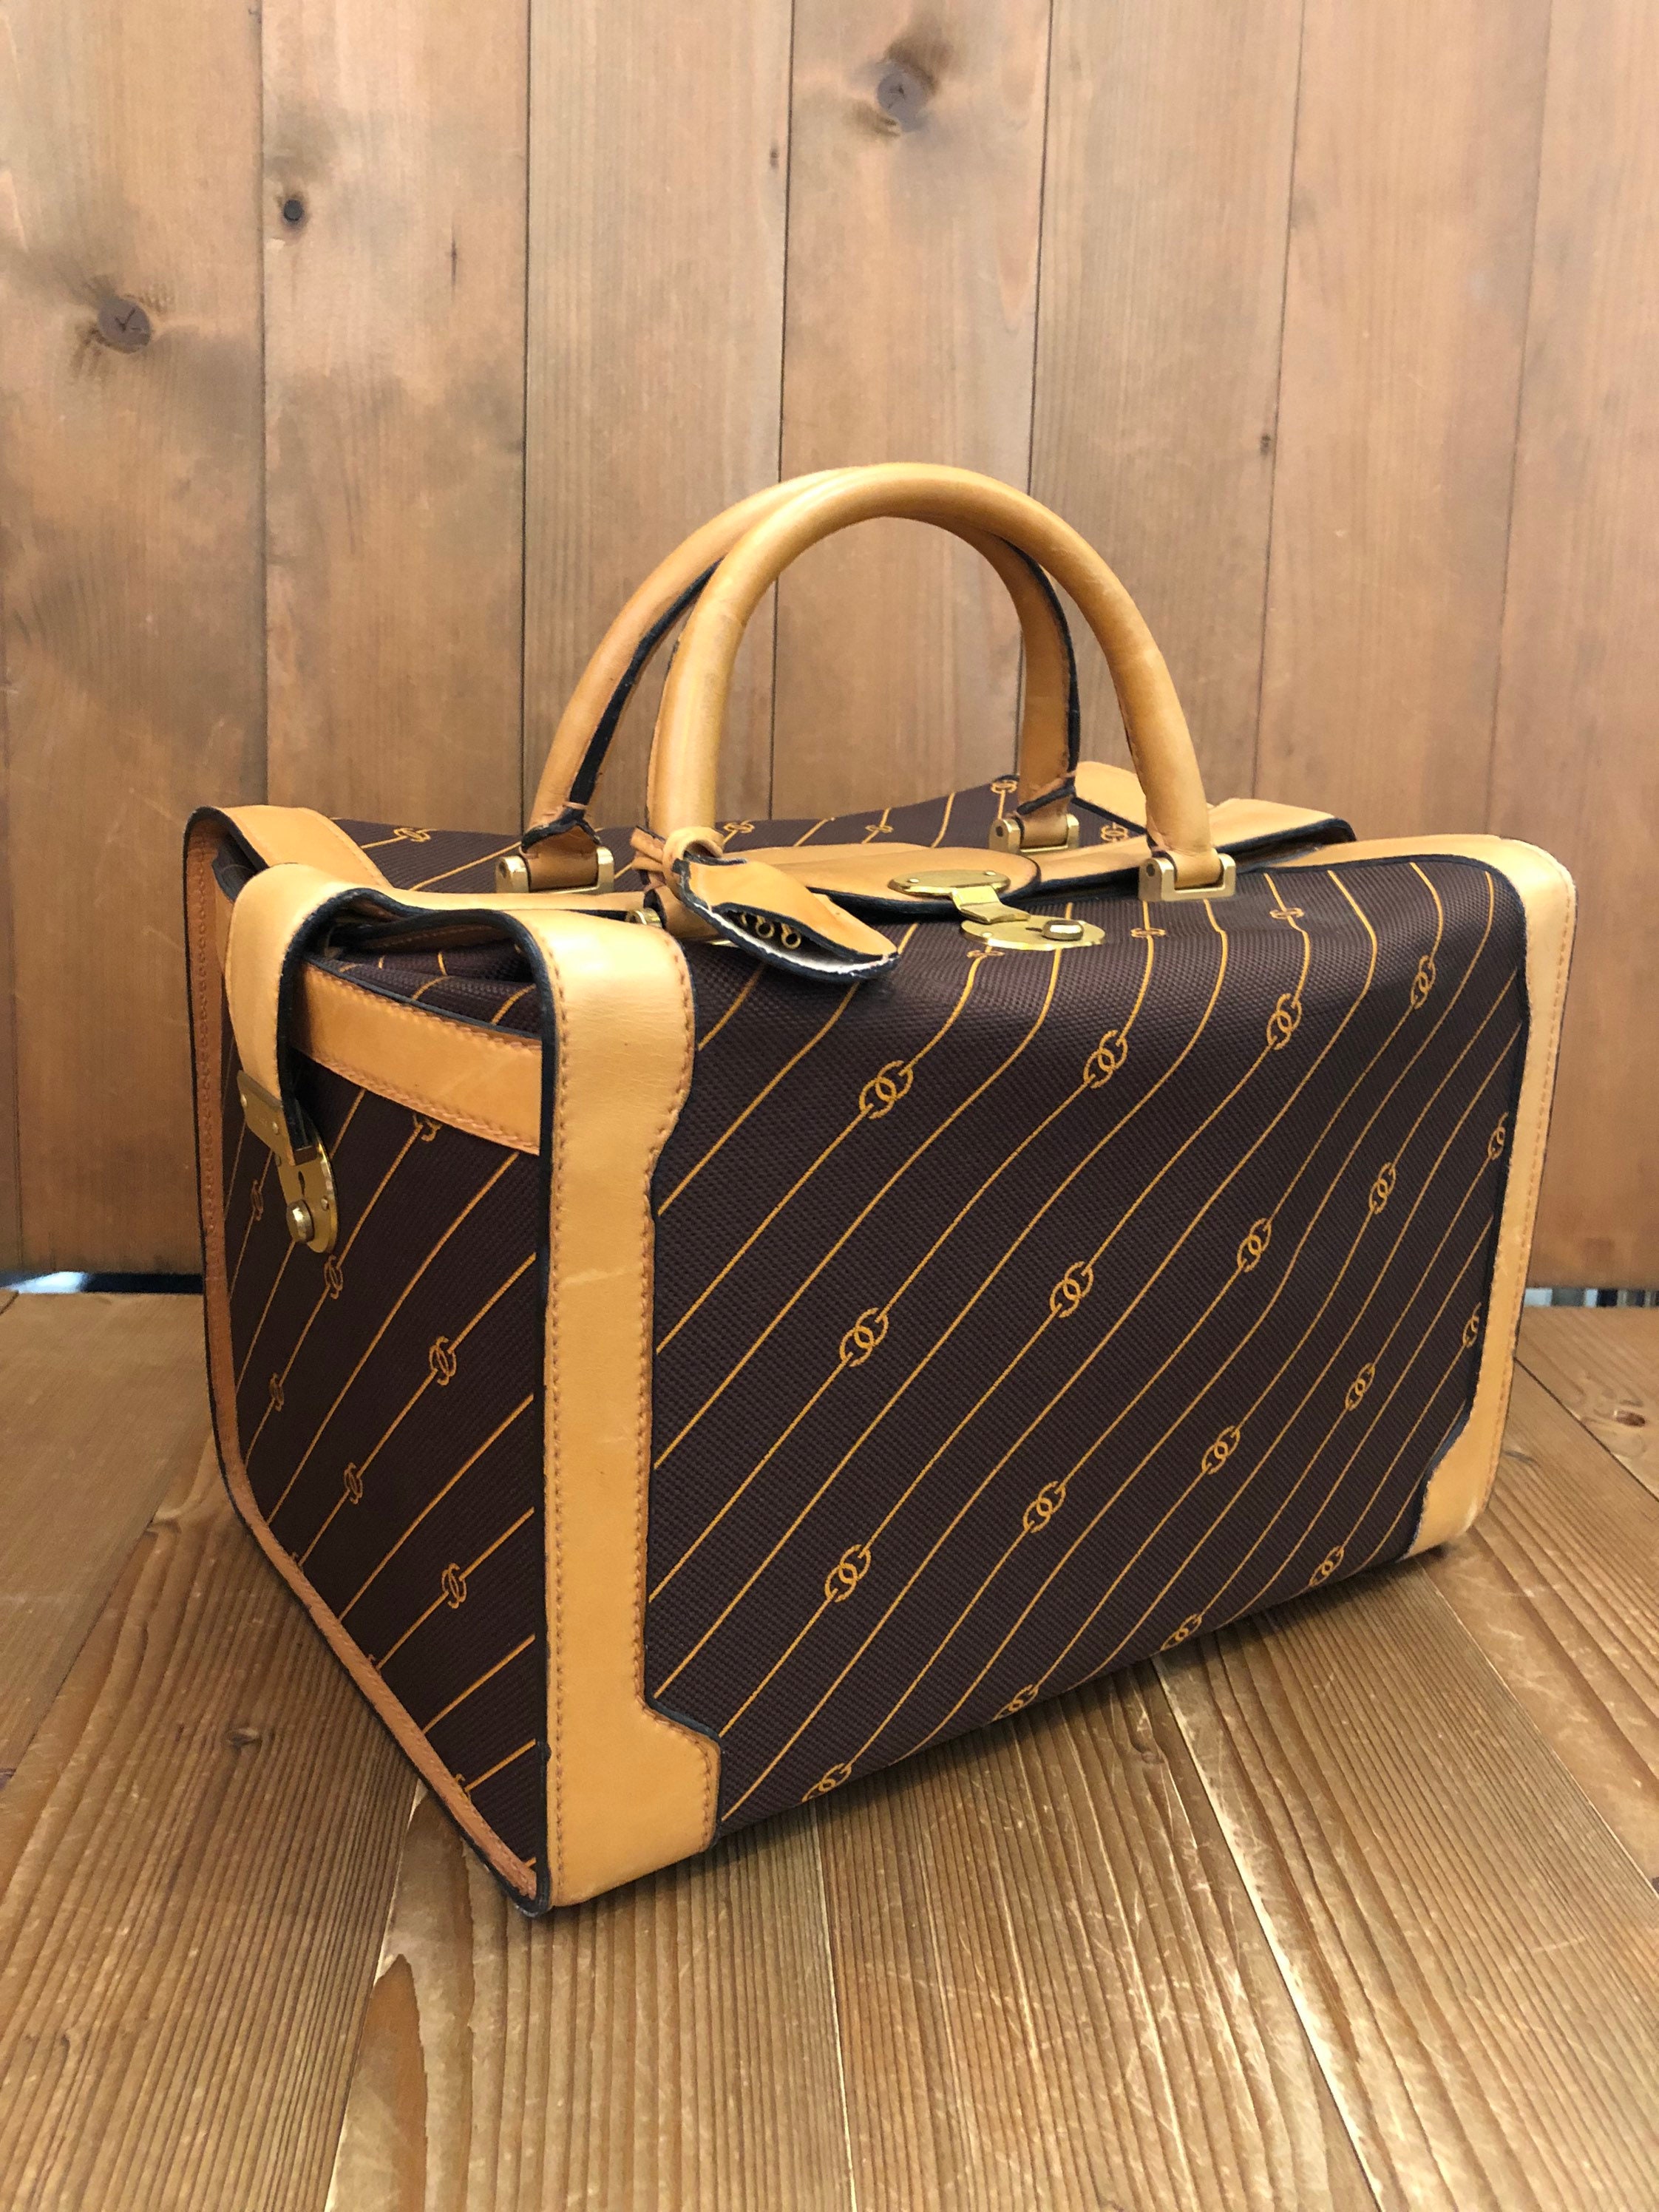 louis-vuitton-monogram-canvas-dog-bag-40-brown-women-softsided-luggage